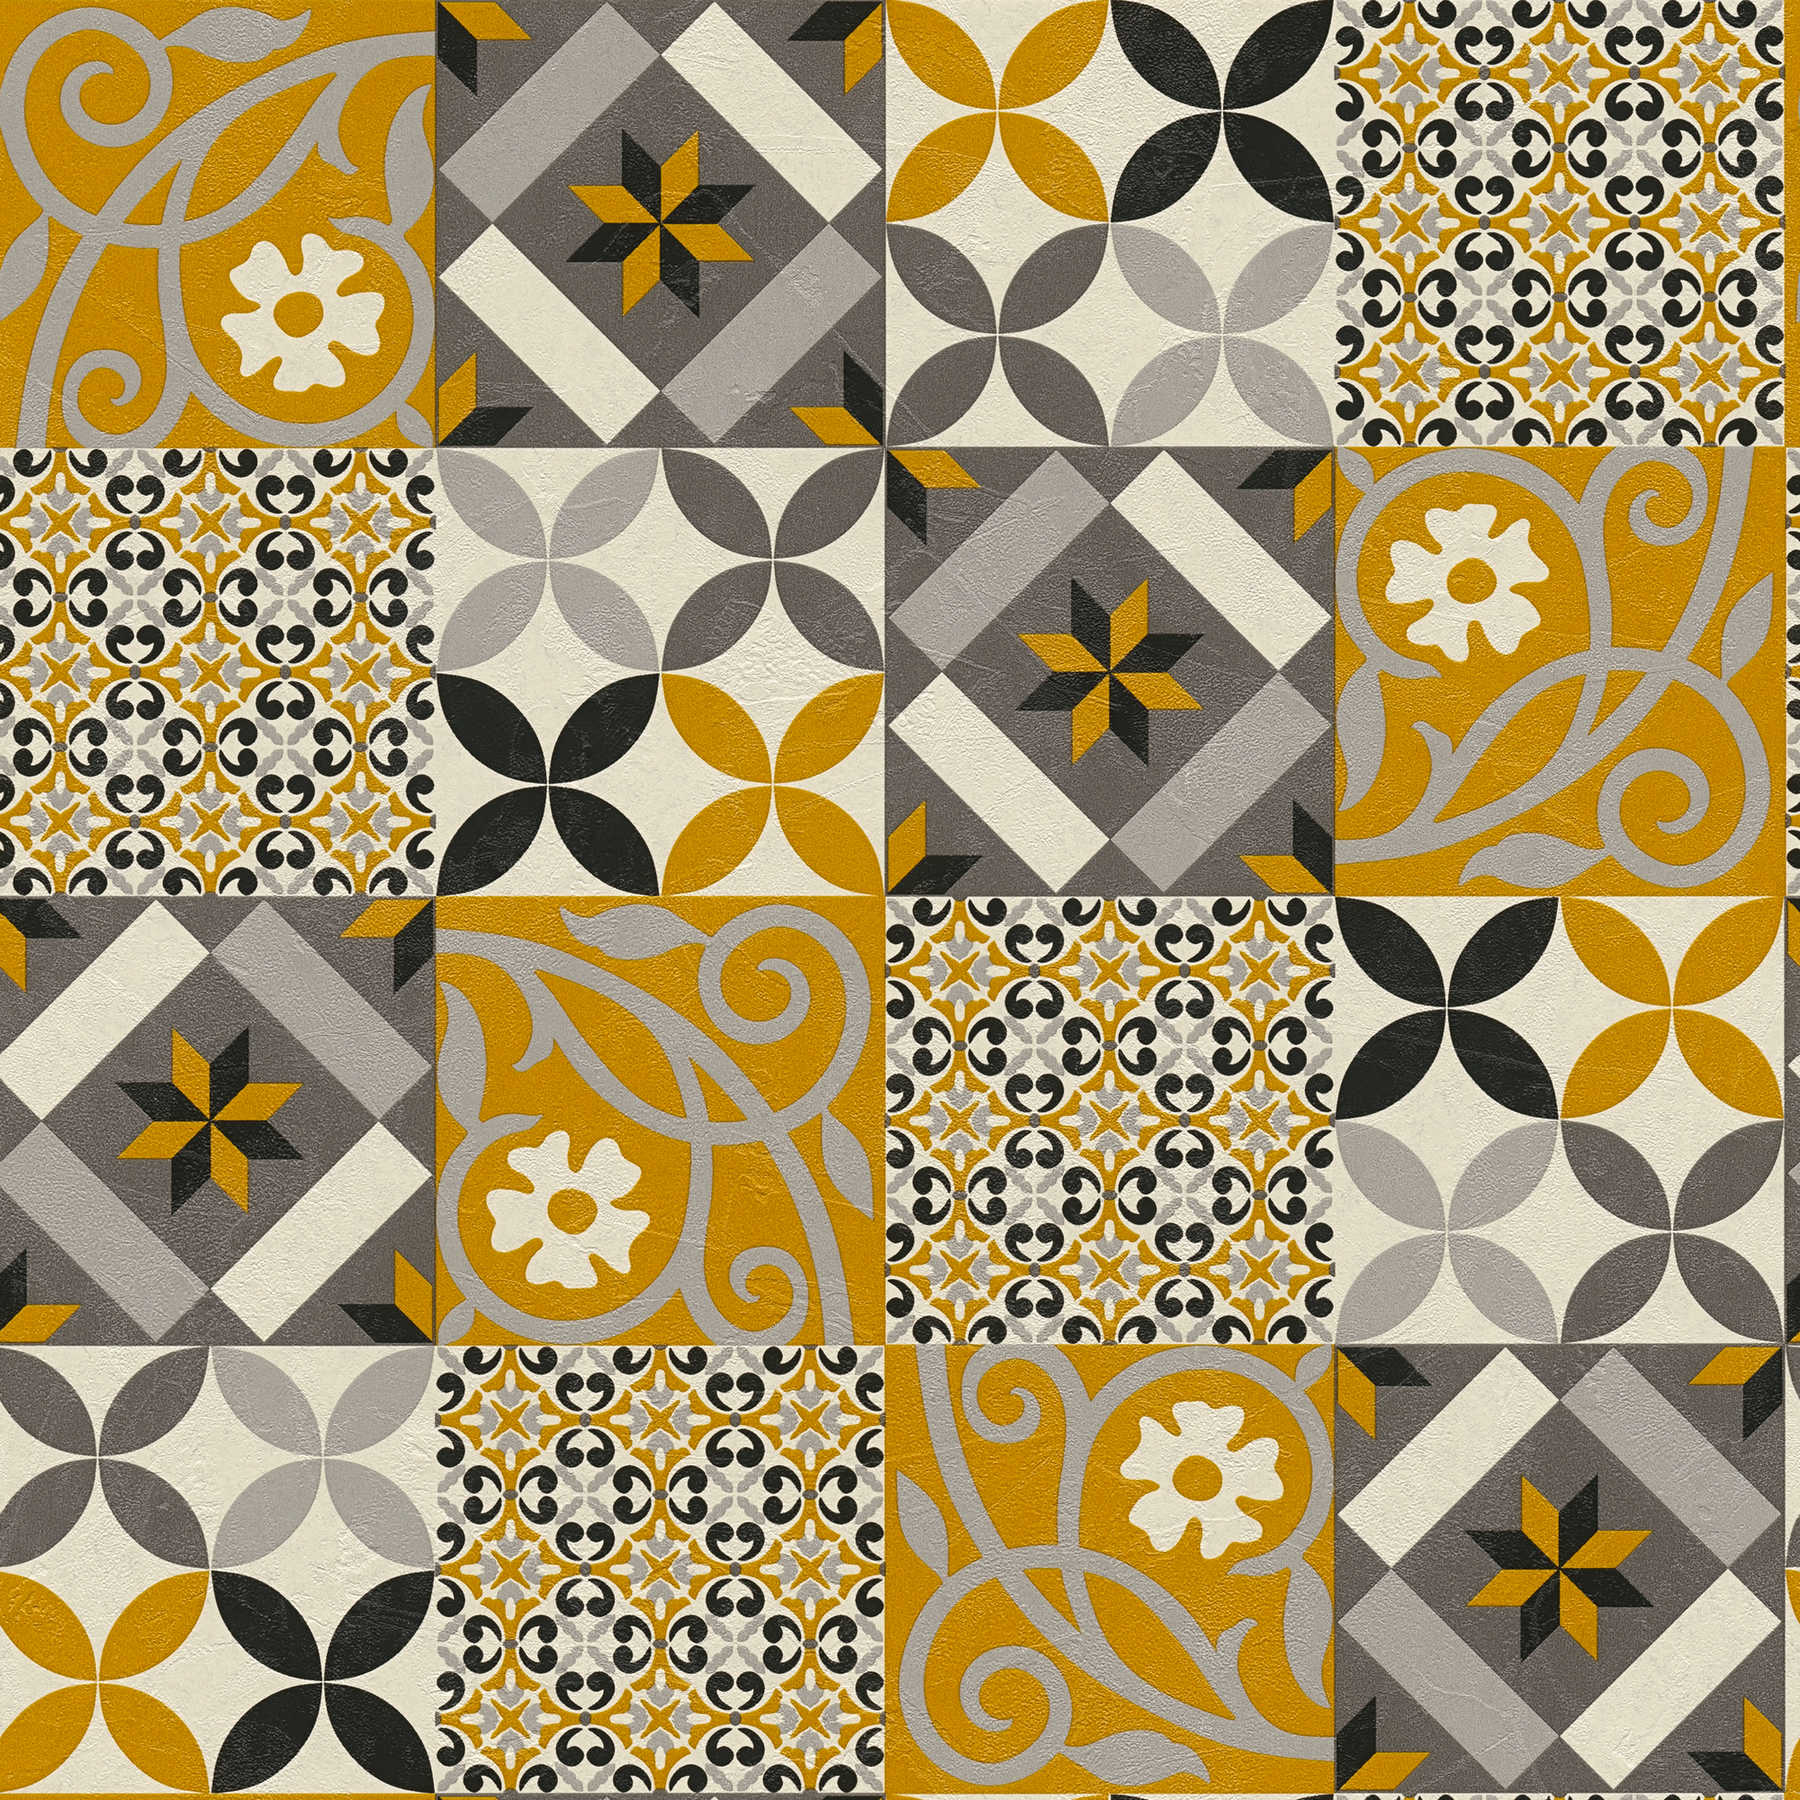         Wallpaper Decor tiles & floral pattern - black, yellow, anthracite
    